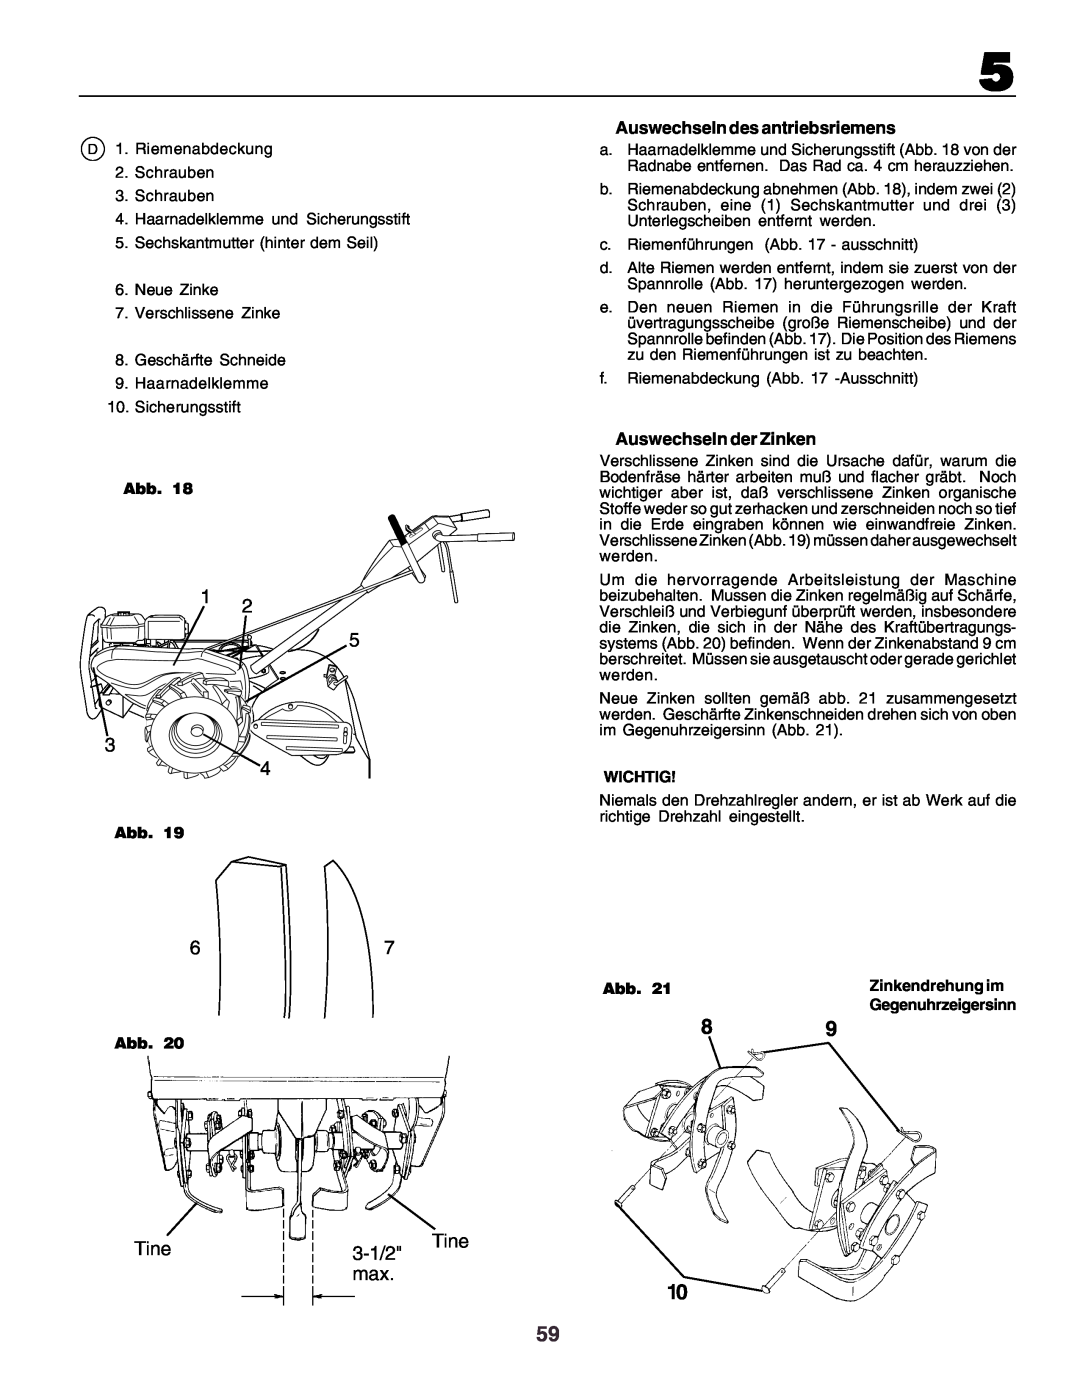 Husqvarna crt51 instruction manual Tine, 3-1/2, Abb, Wichtig, Zinkendrehung im 